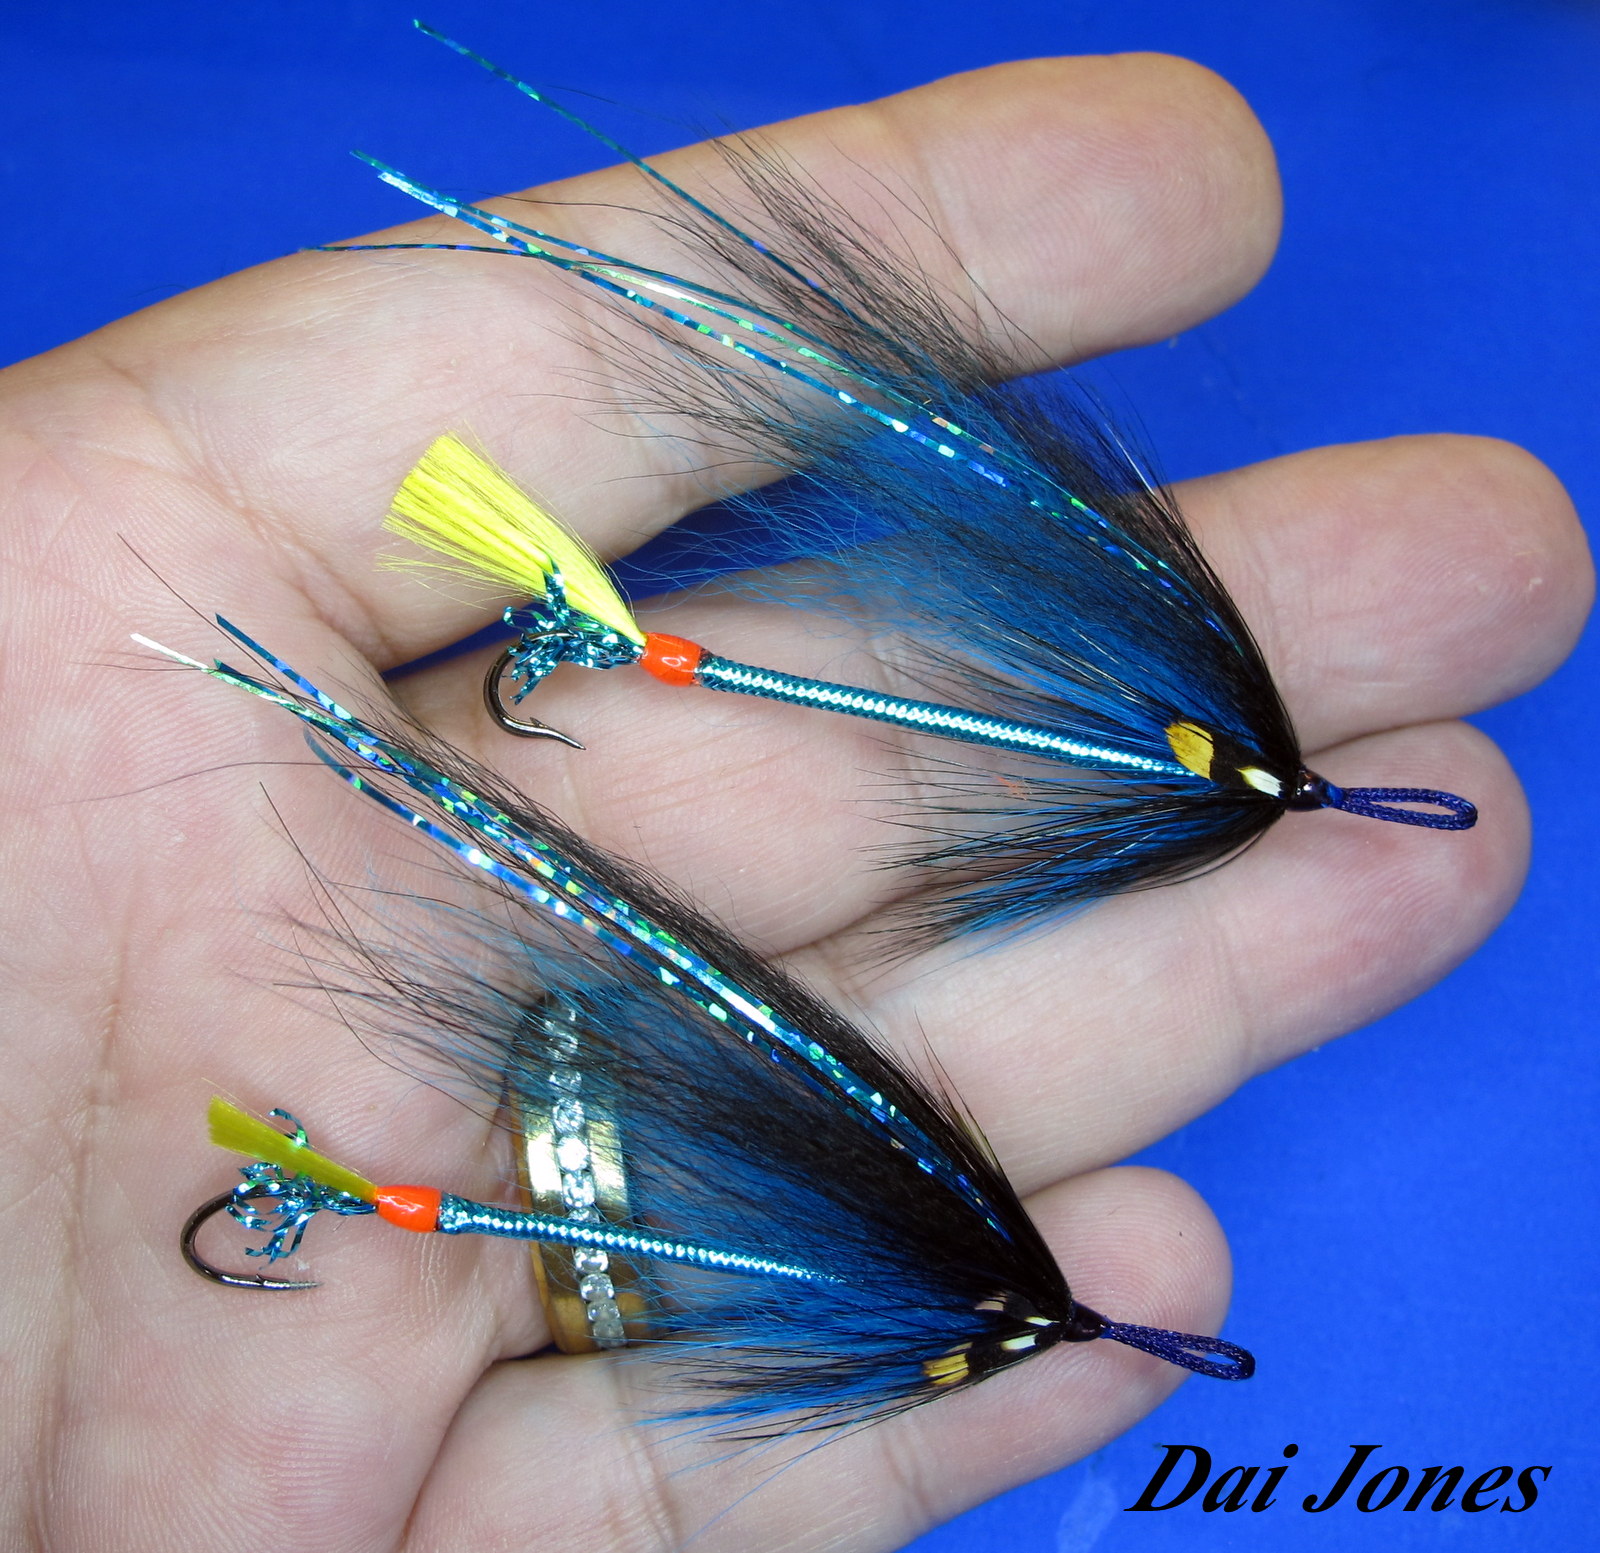 daijones flies: River Usk salmon and flies.